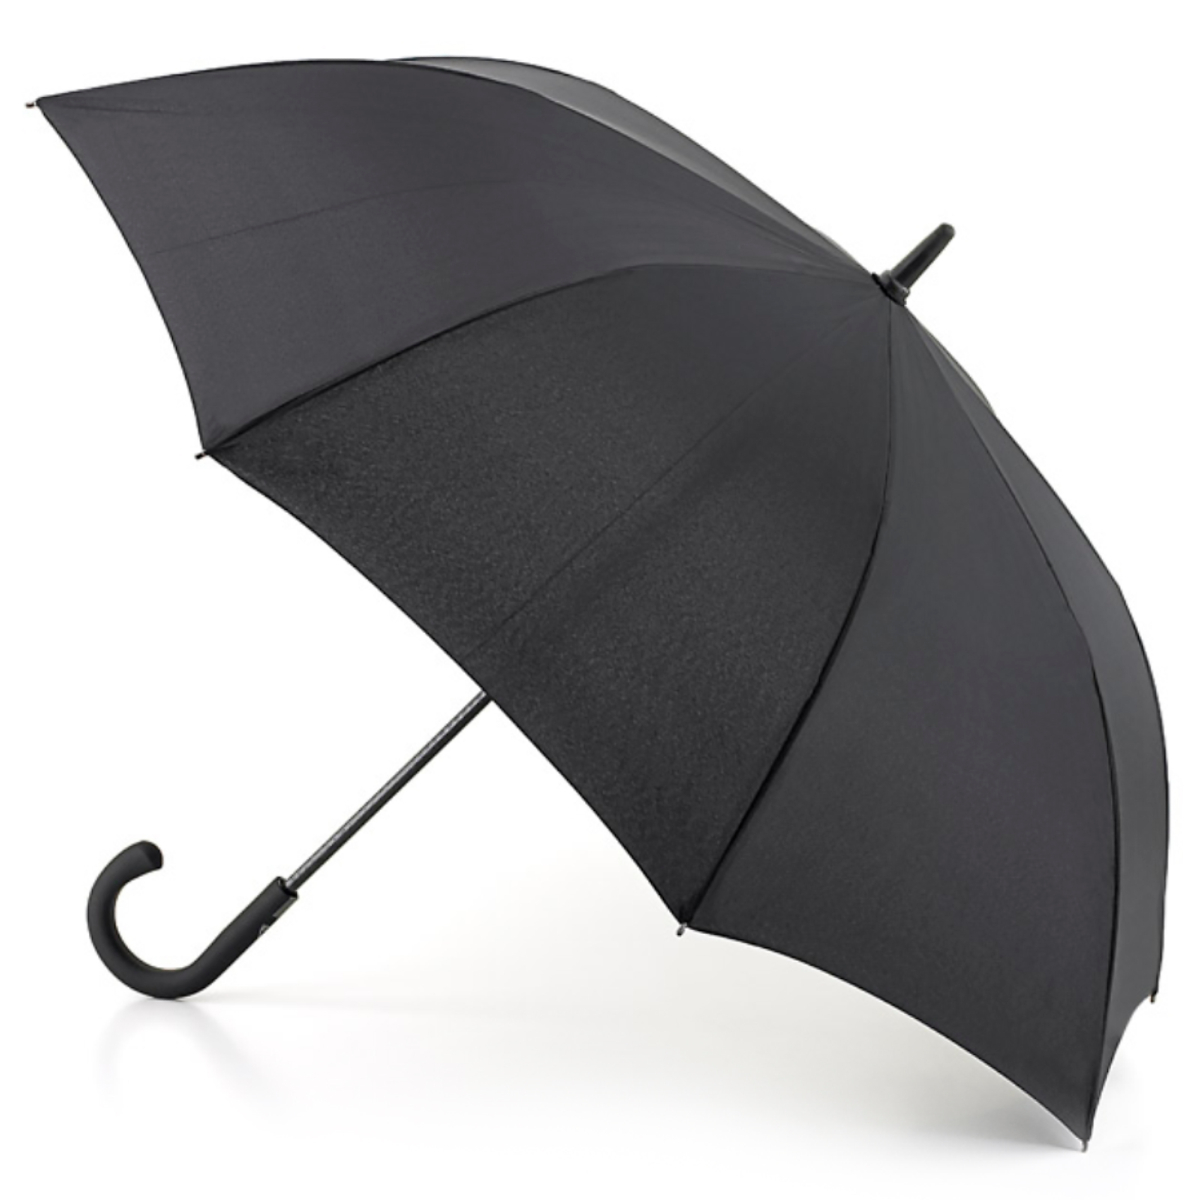 Fulton Knightsbridge Gents Umbrella - Black